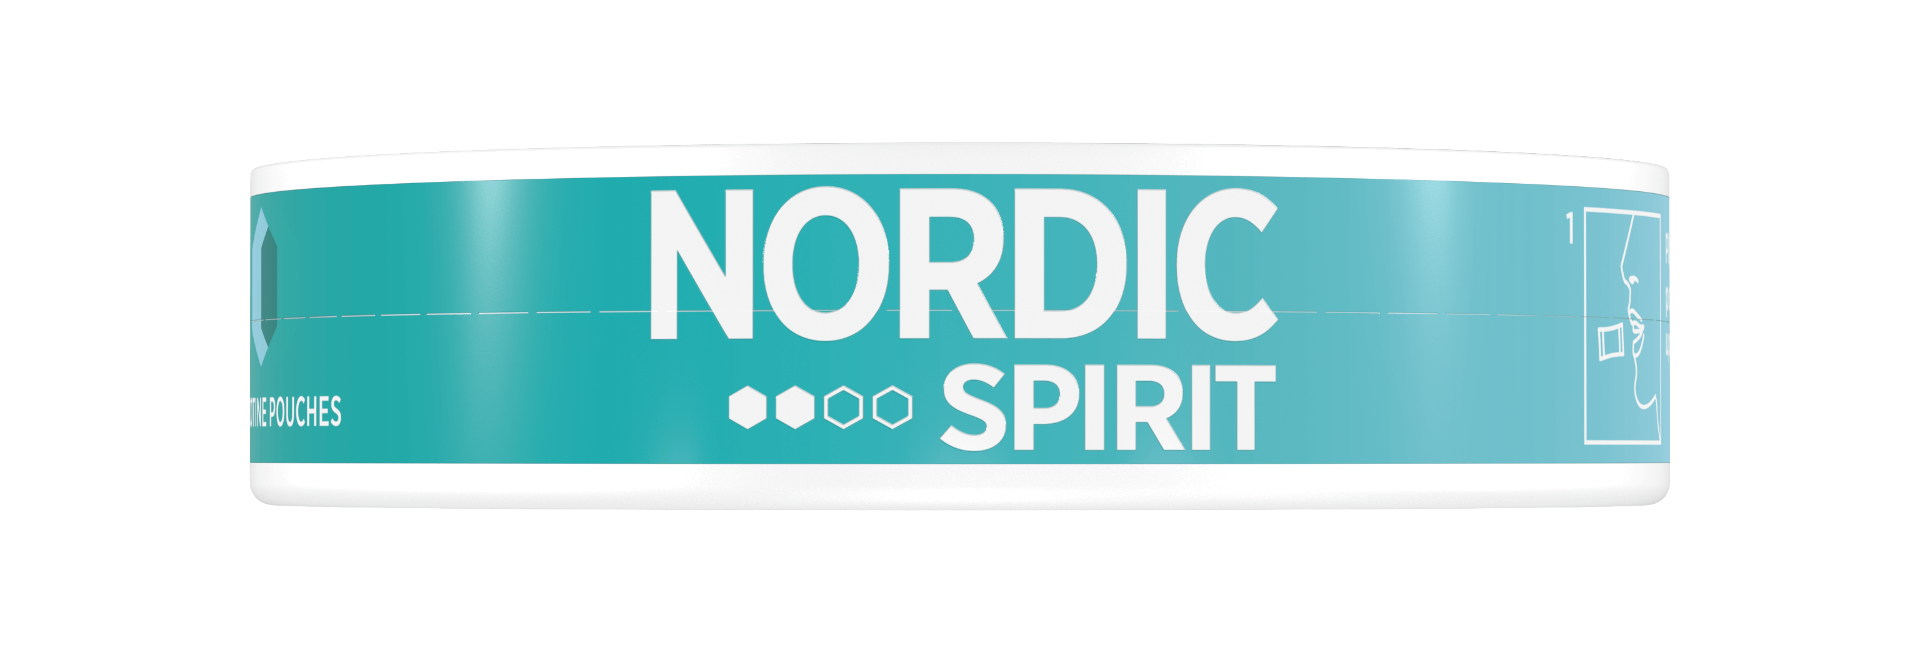 nordic spirit mini can